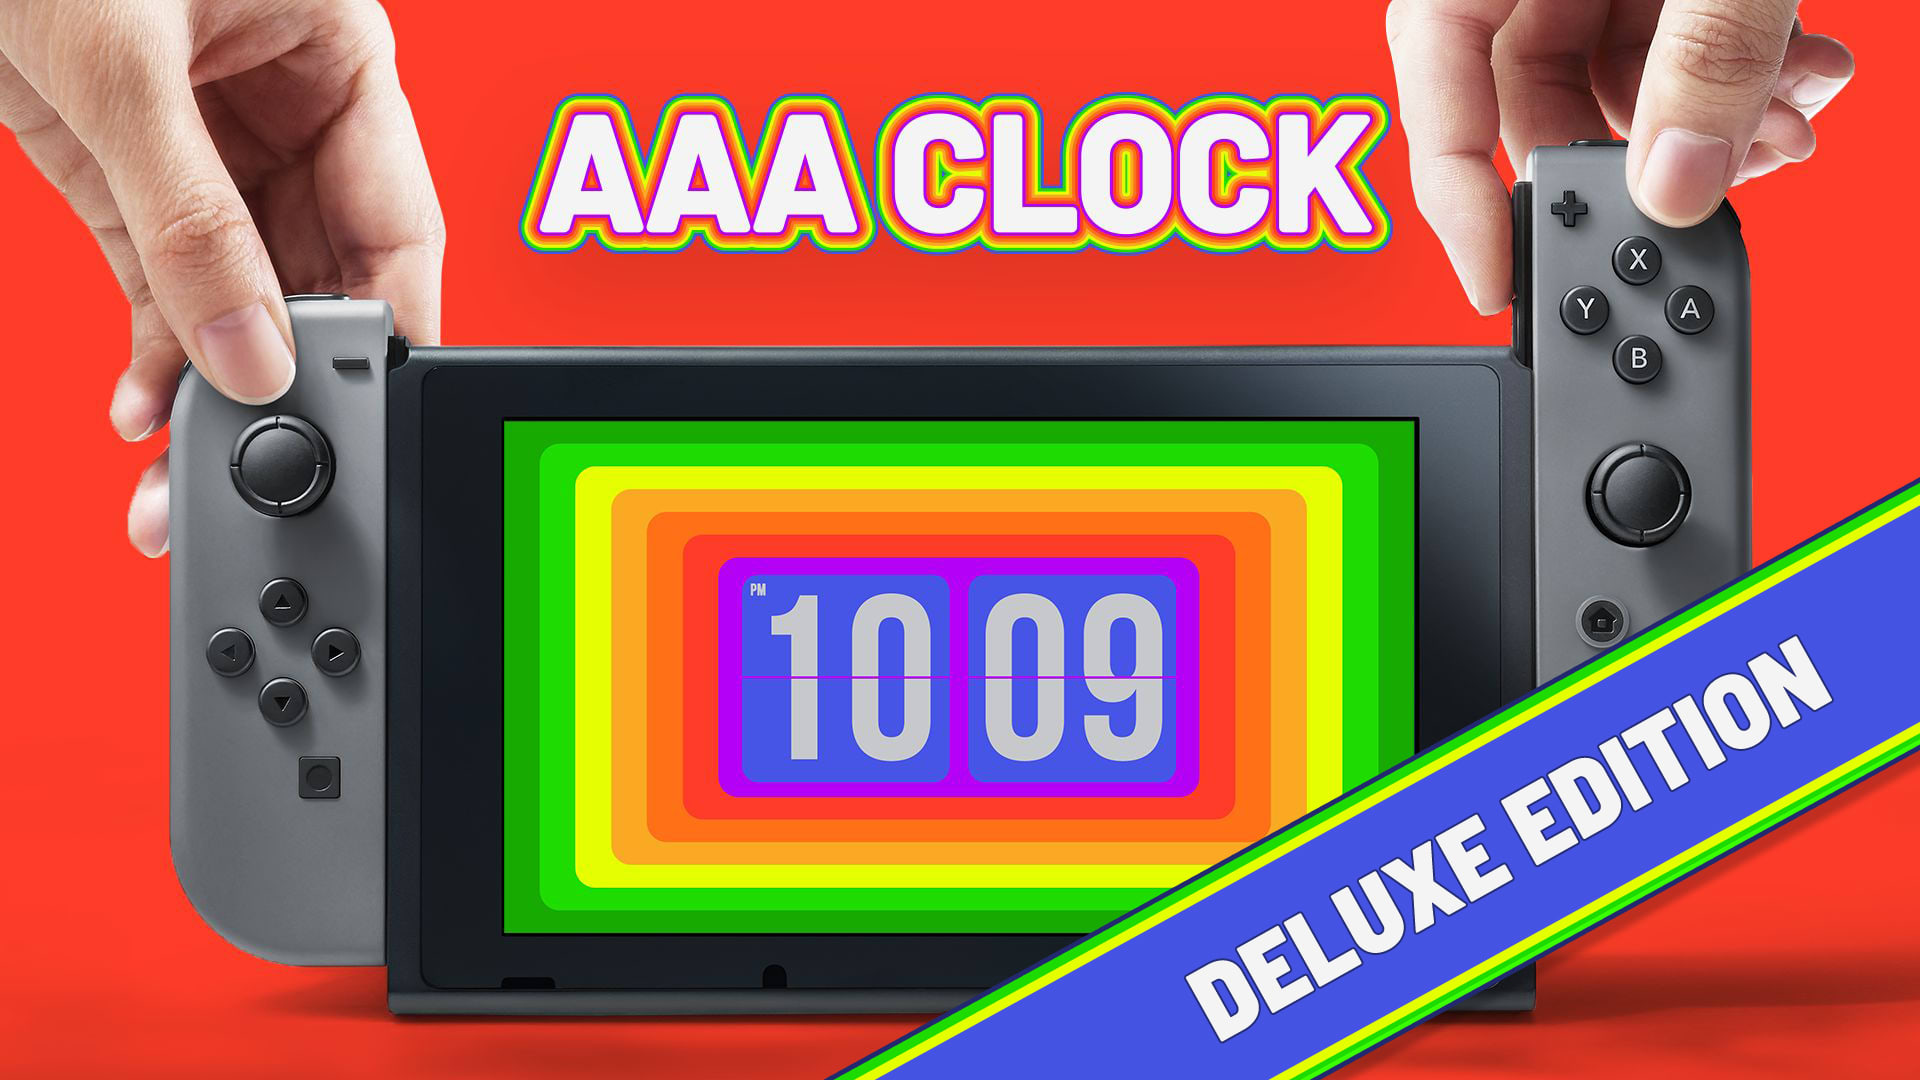 AAA Clock Deluxe Edition